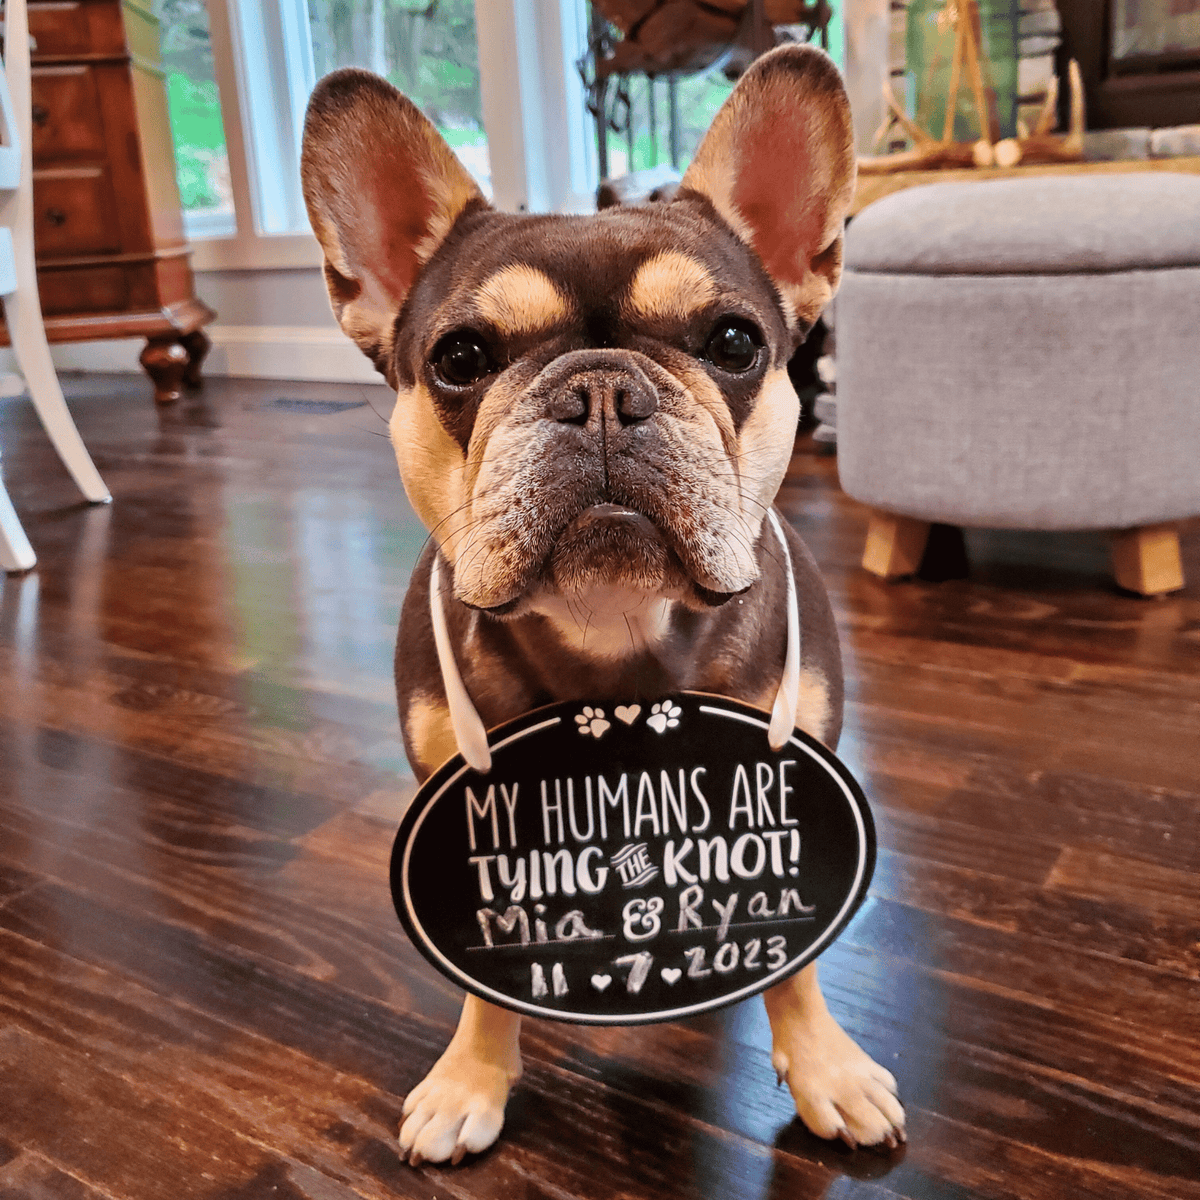 Pet Wedding Announcement Chalkboard Sign - Pet Perennials Dogs in Weddings